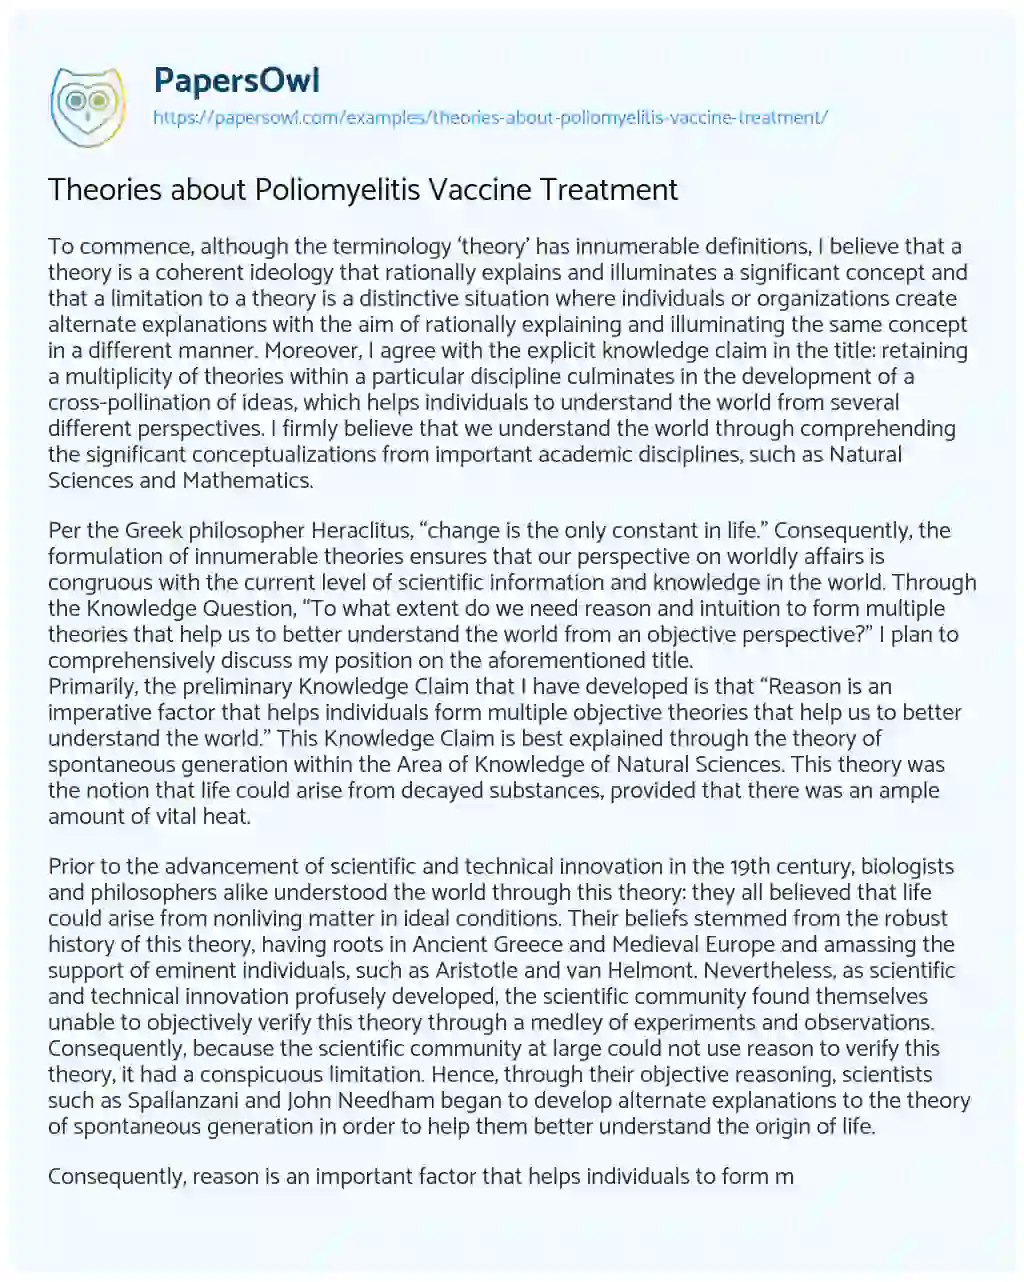 Essay on Theories about Poliomyelitis Vaccine Treatment